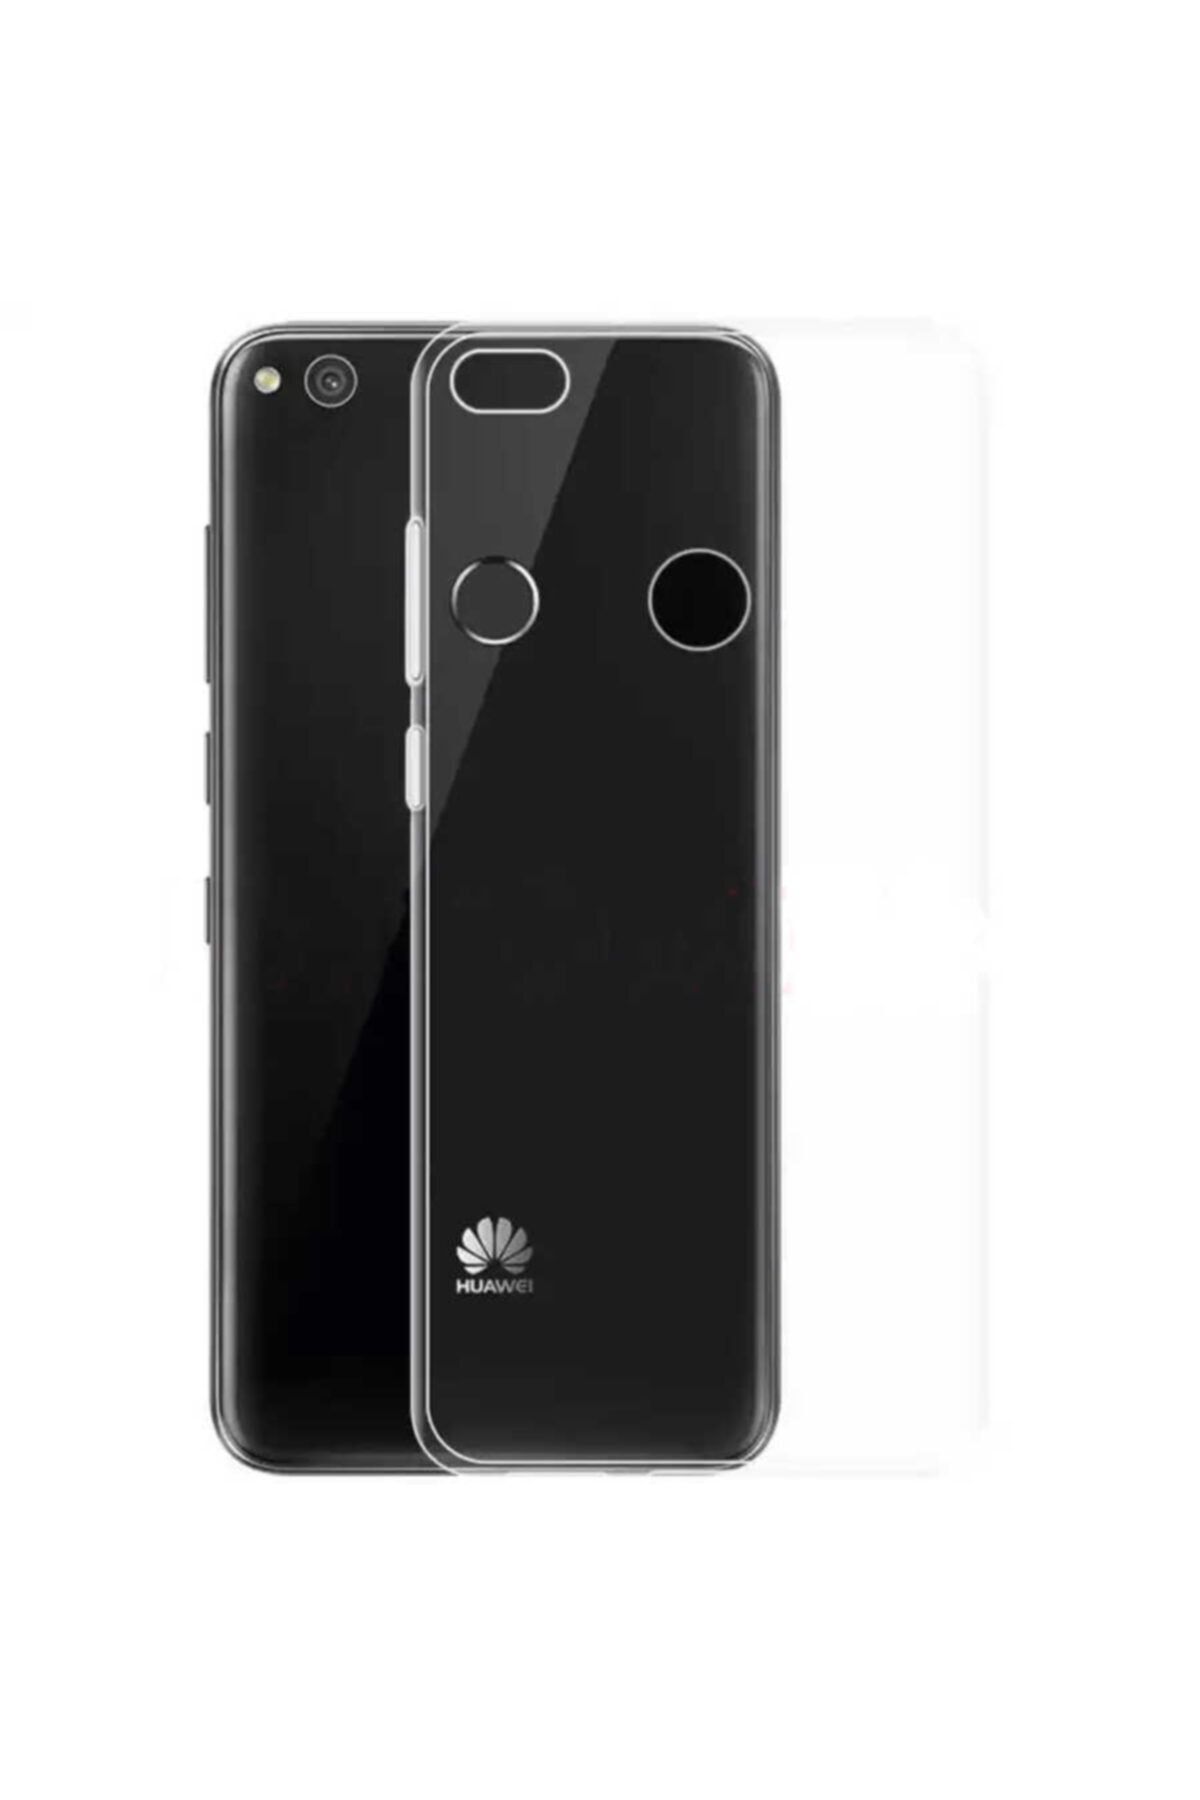 UnDePlus Huawei P8 Lite Kılıf Şeffaf Silikon Hibrit Case